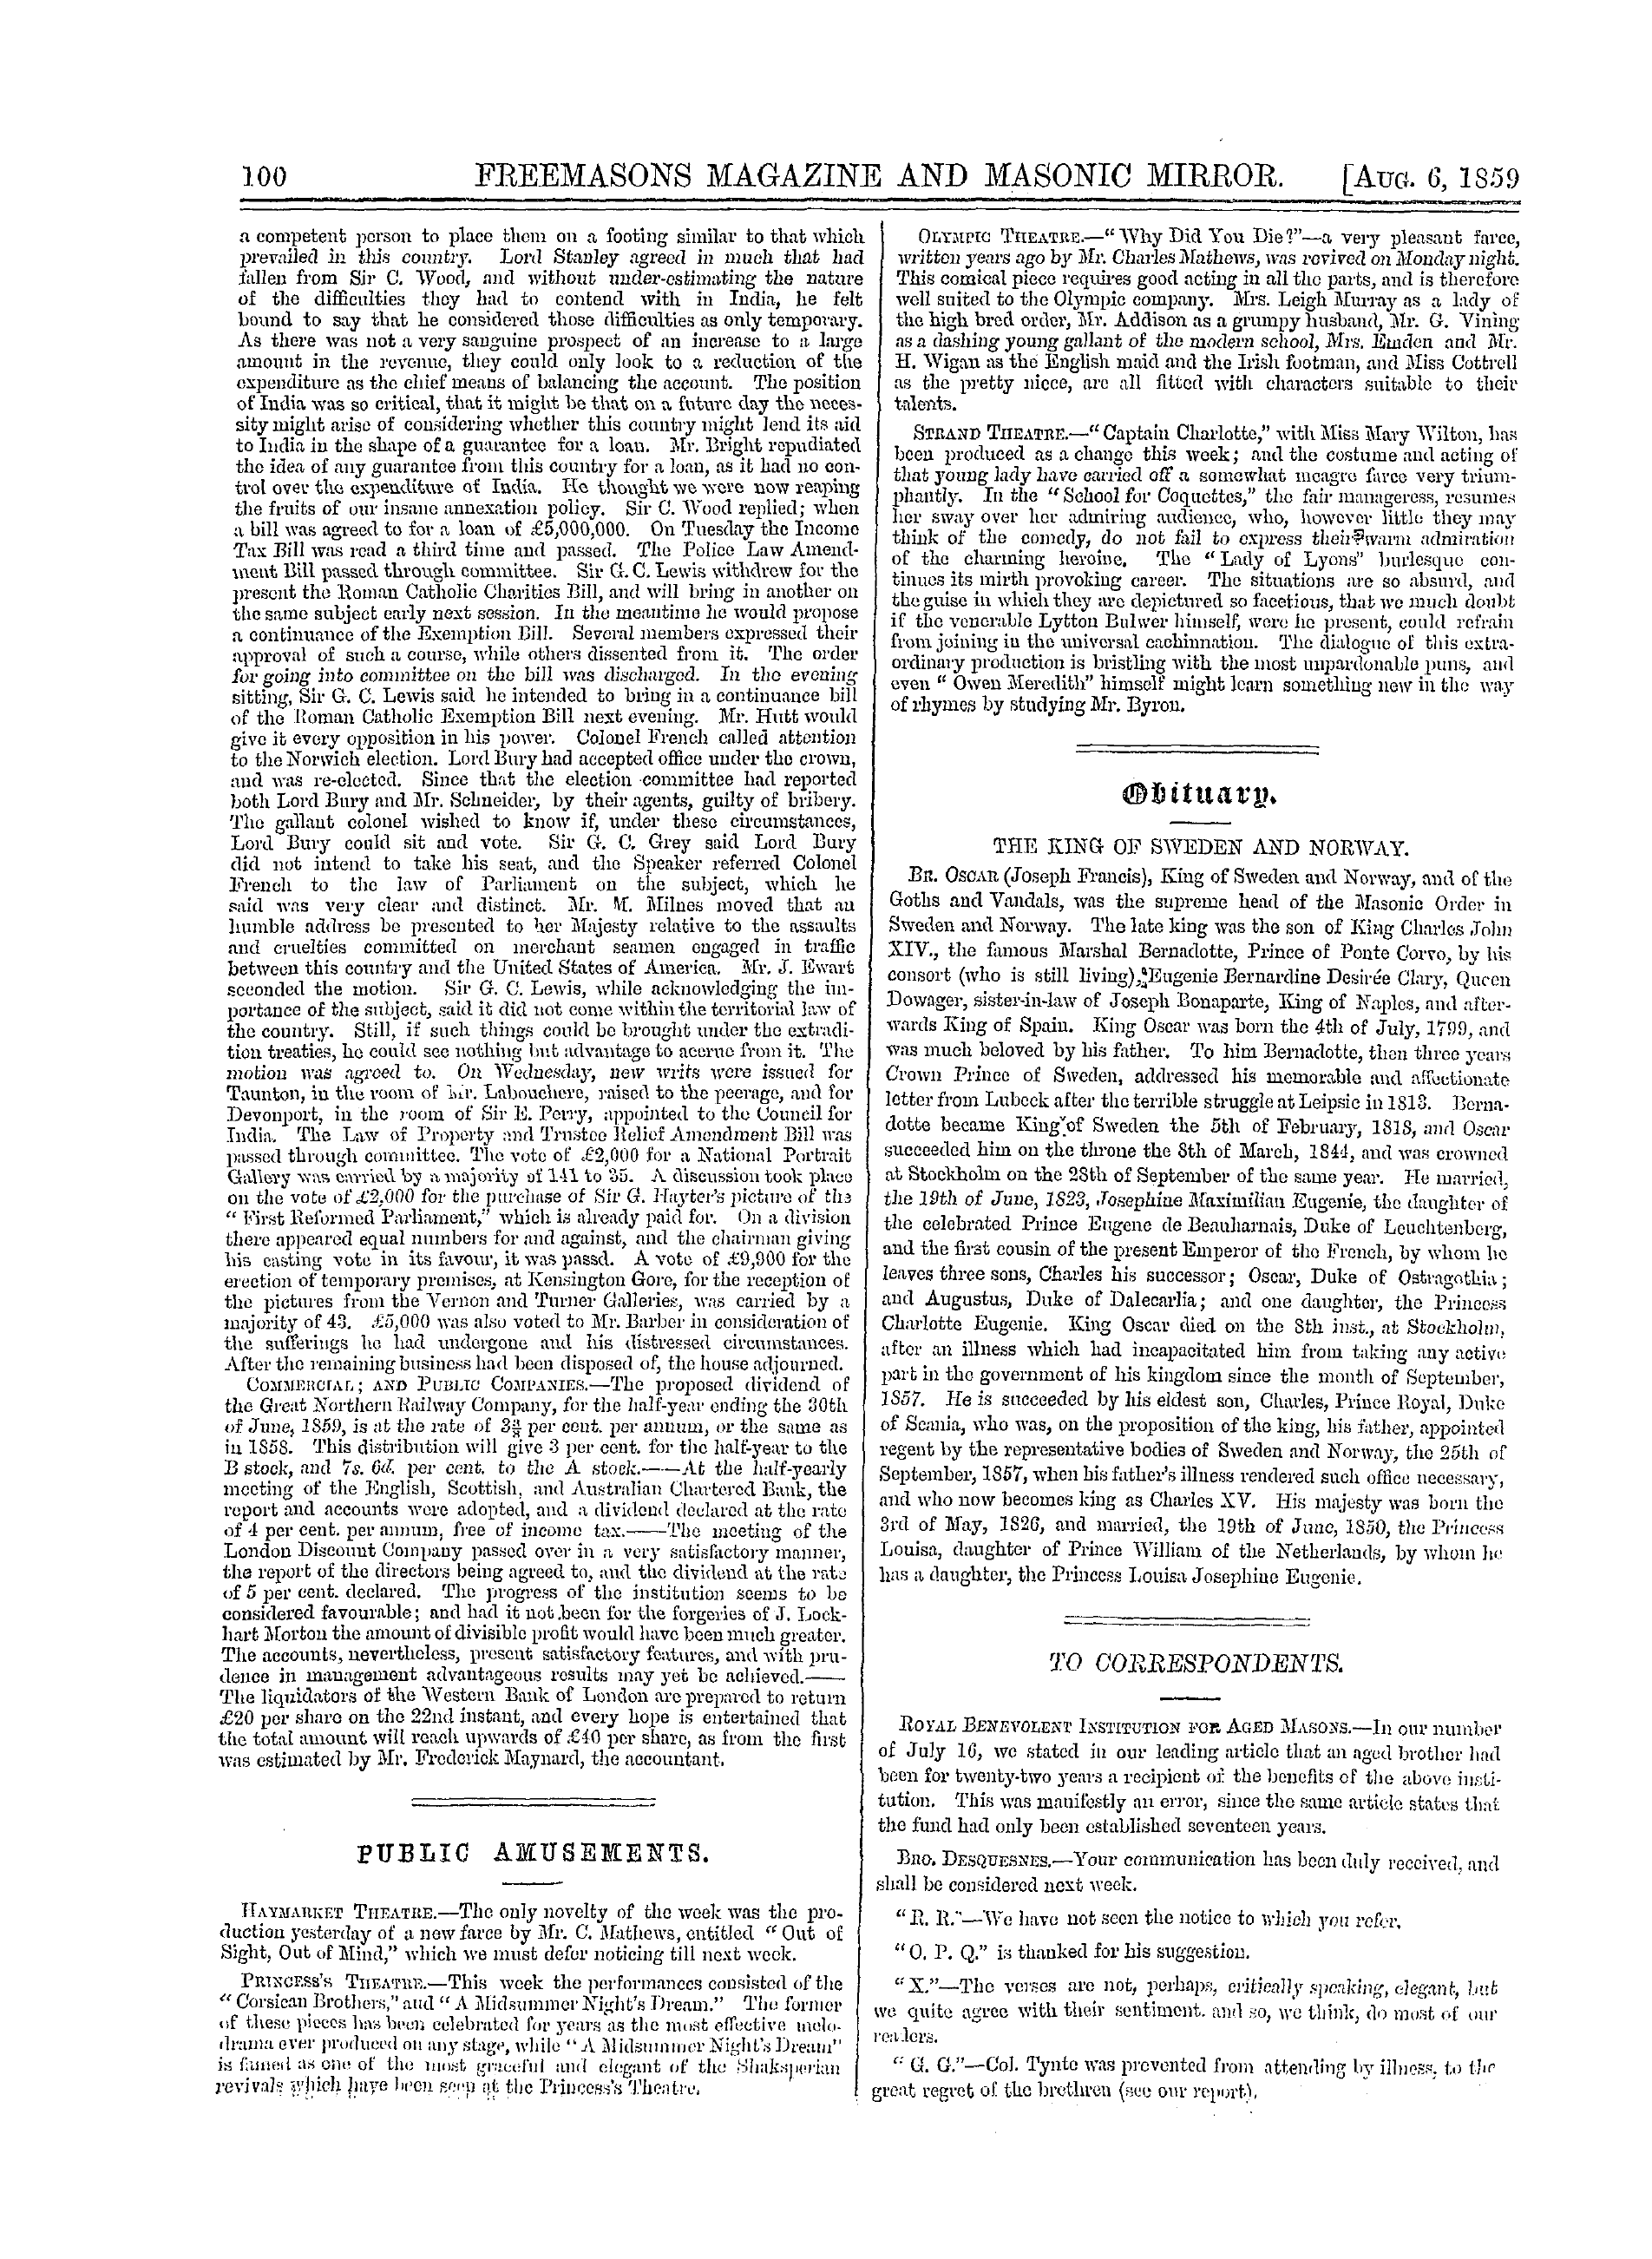 The Freemasons' Monthly Magazine: 1859-08-06 - The Week.